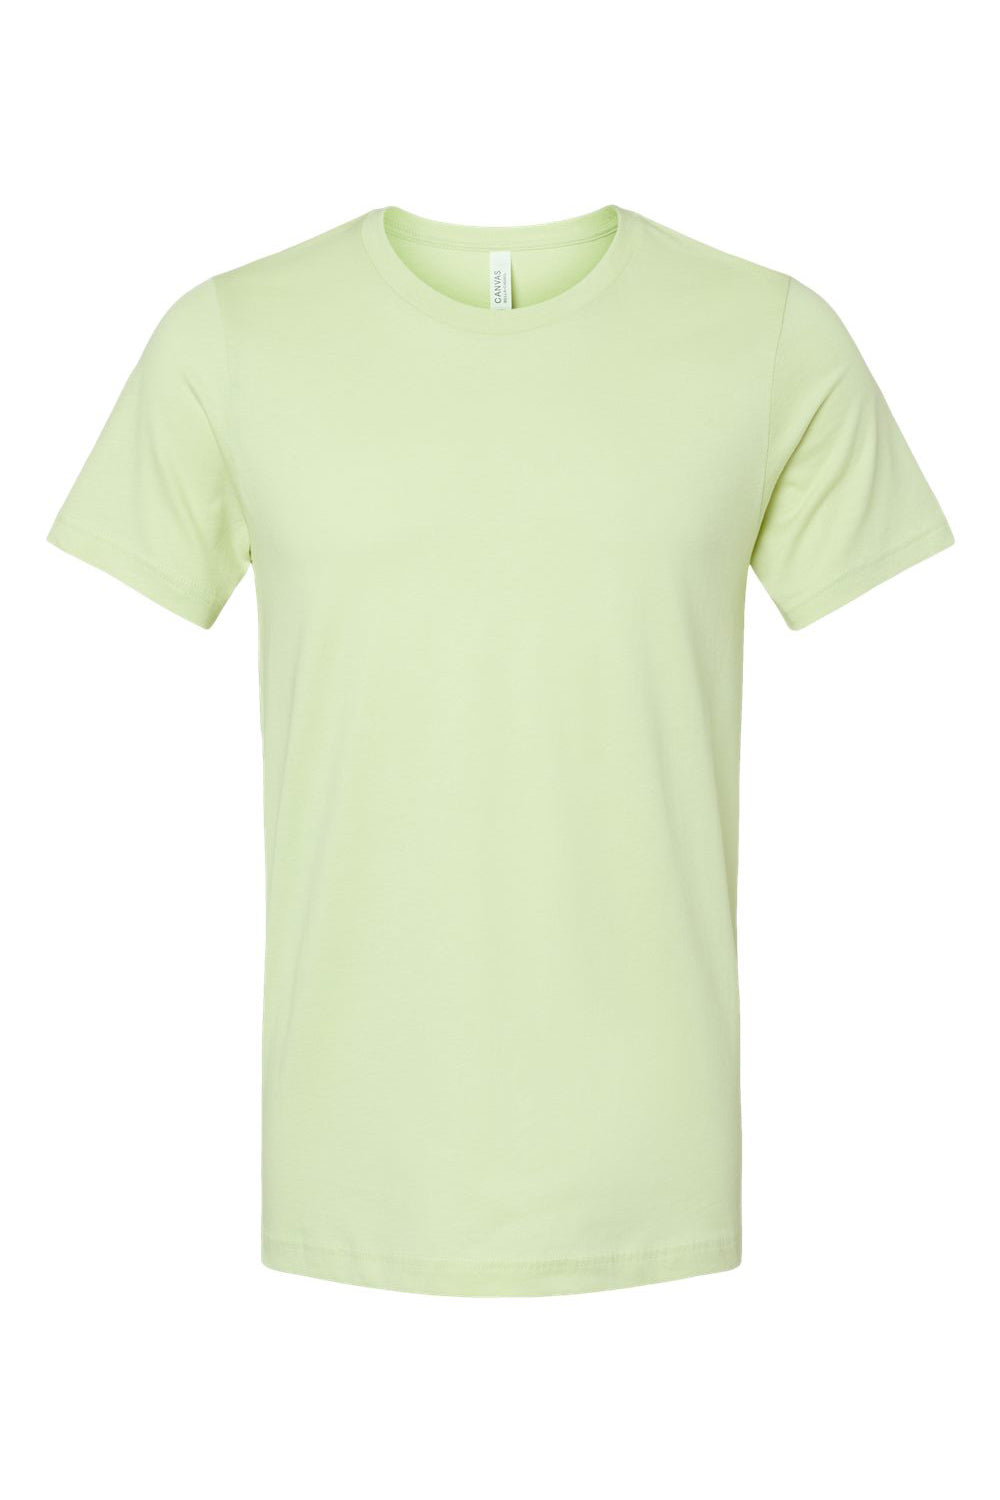 Bella + Canvas BC3001/3001C Mens Jersey Short Sleeve Crewneck T-Shirt Spring Green Flat Front